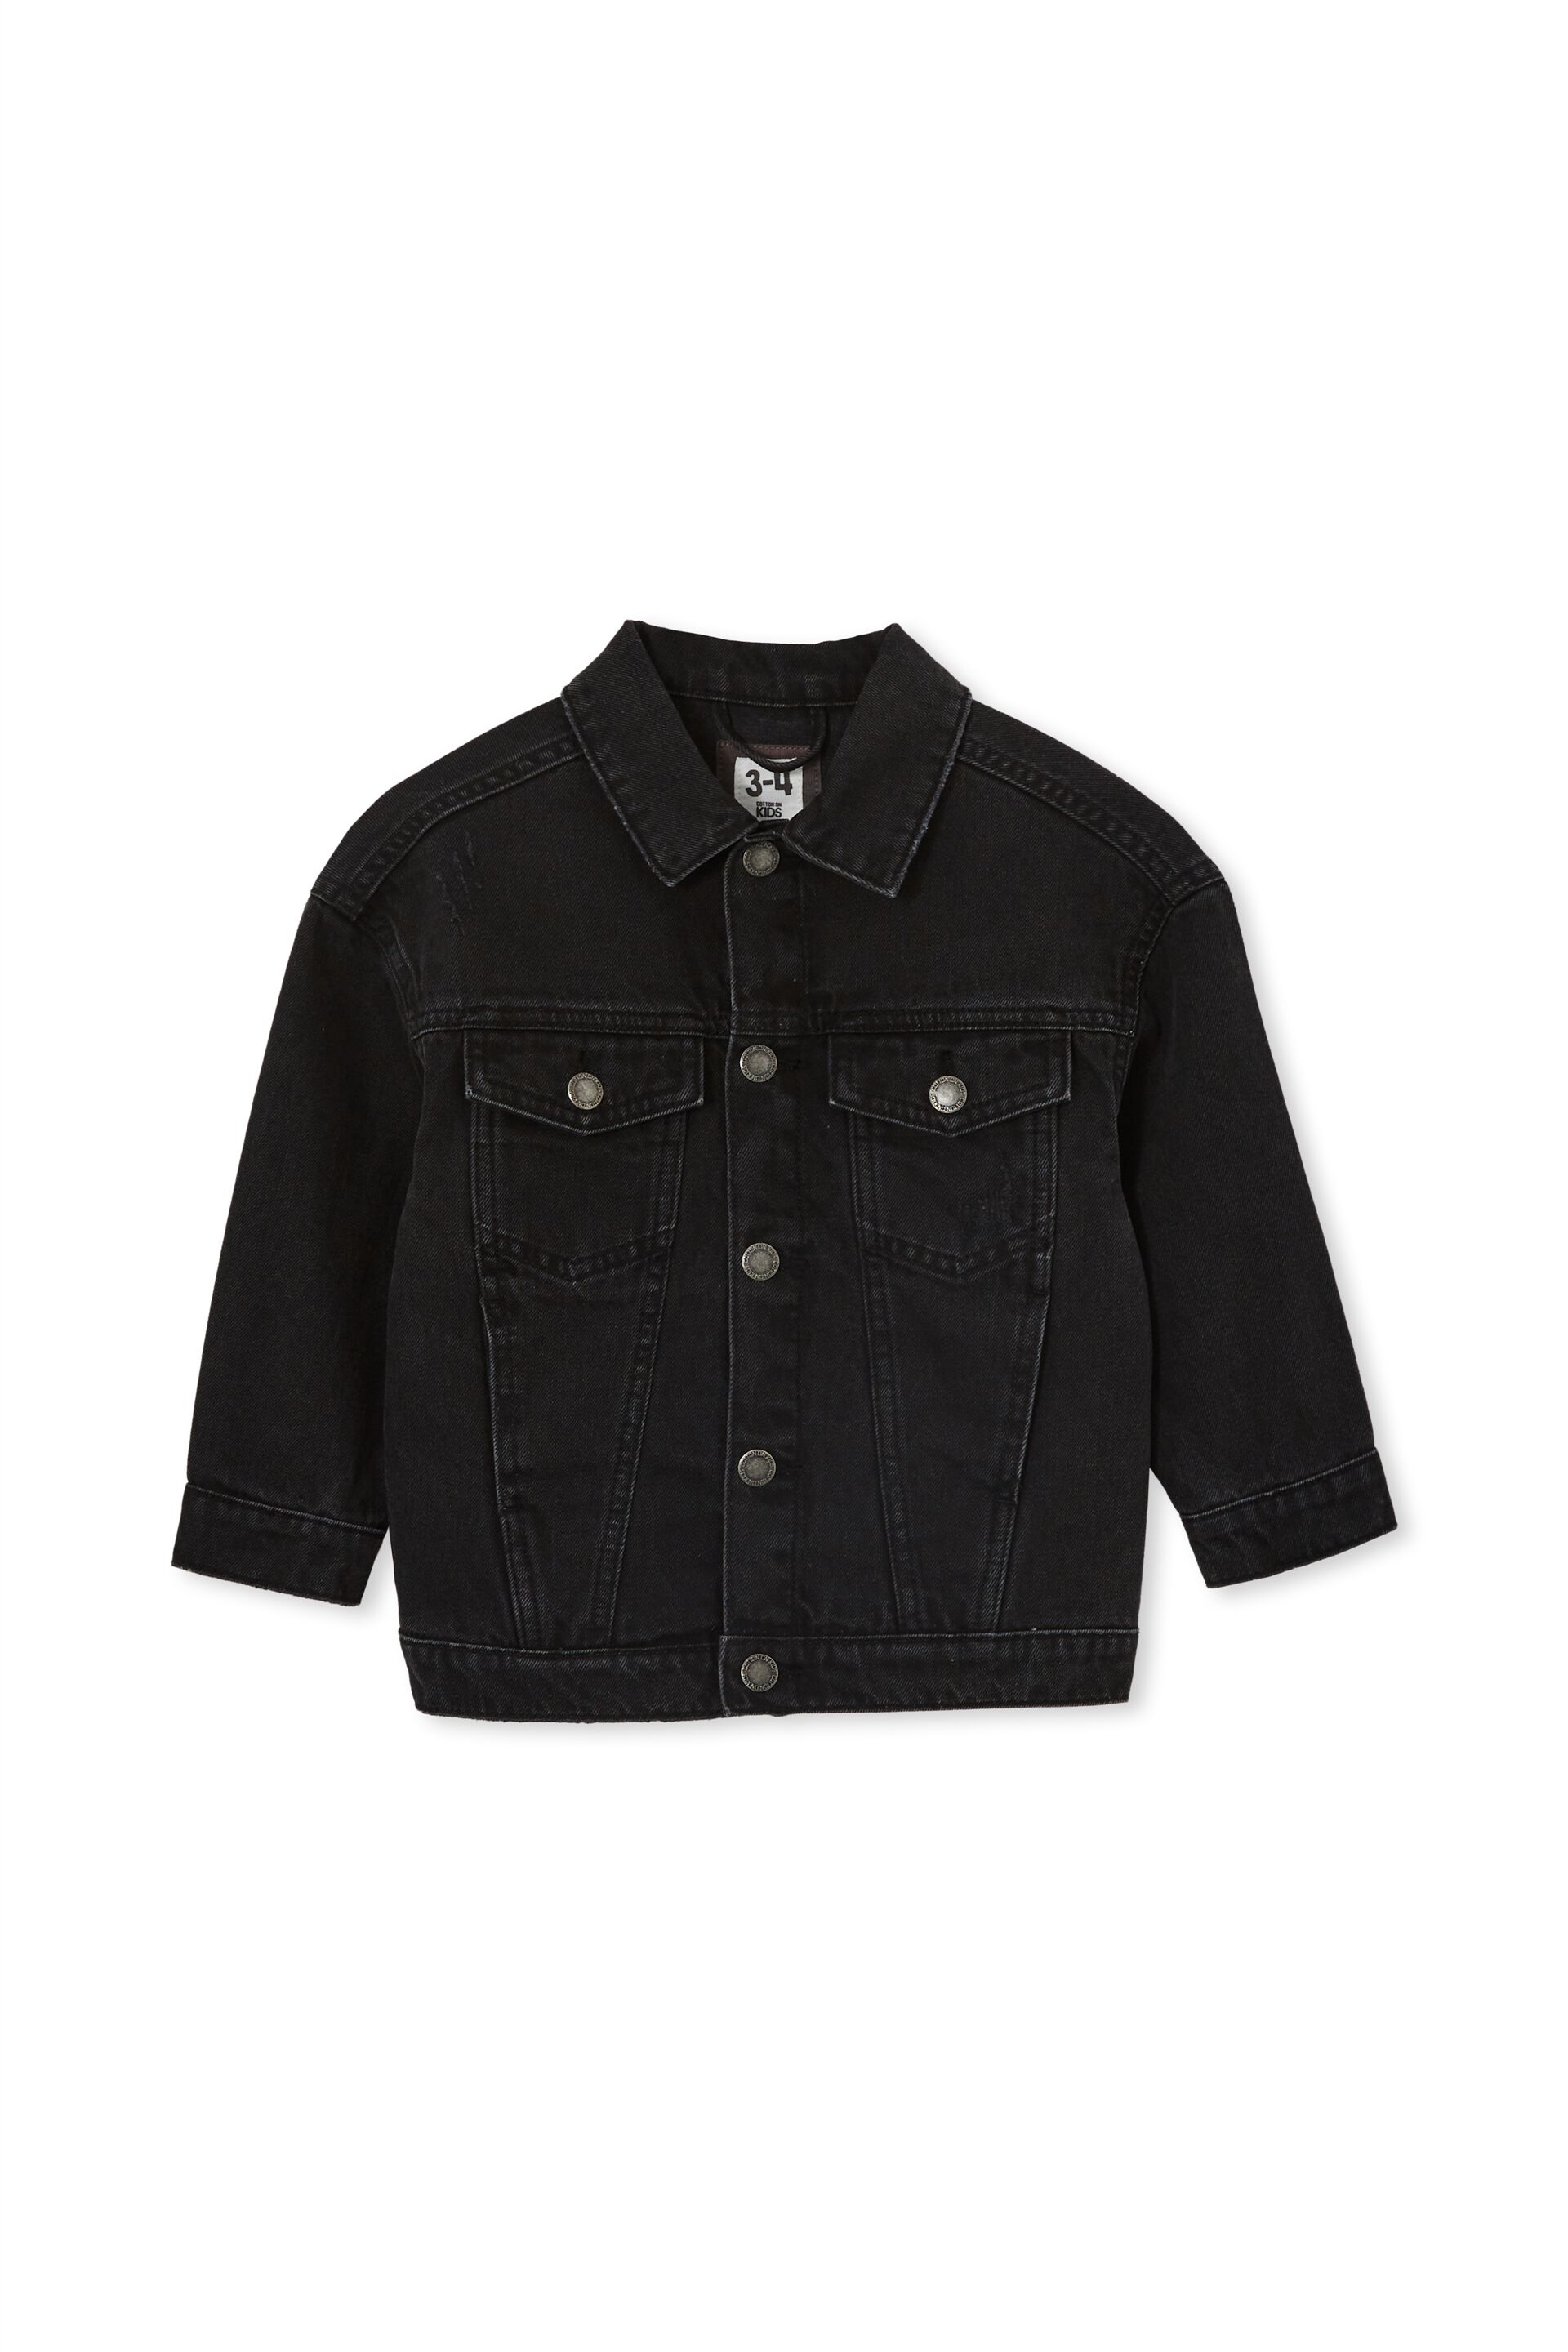 Women Girls Distressed Black Denim Jean Jacket With Silver Details Brand  New XS | eBay